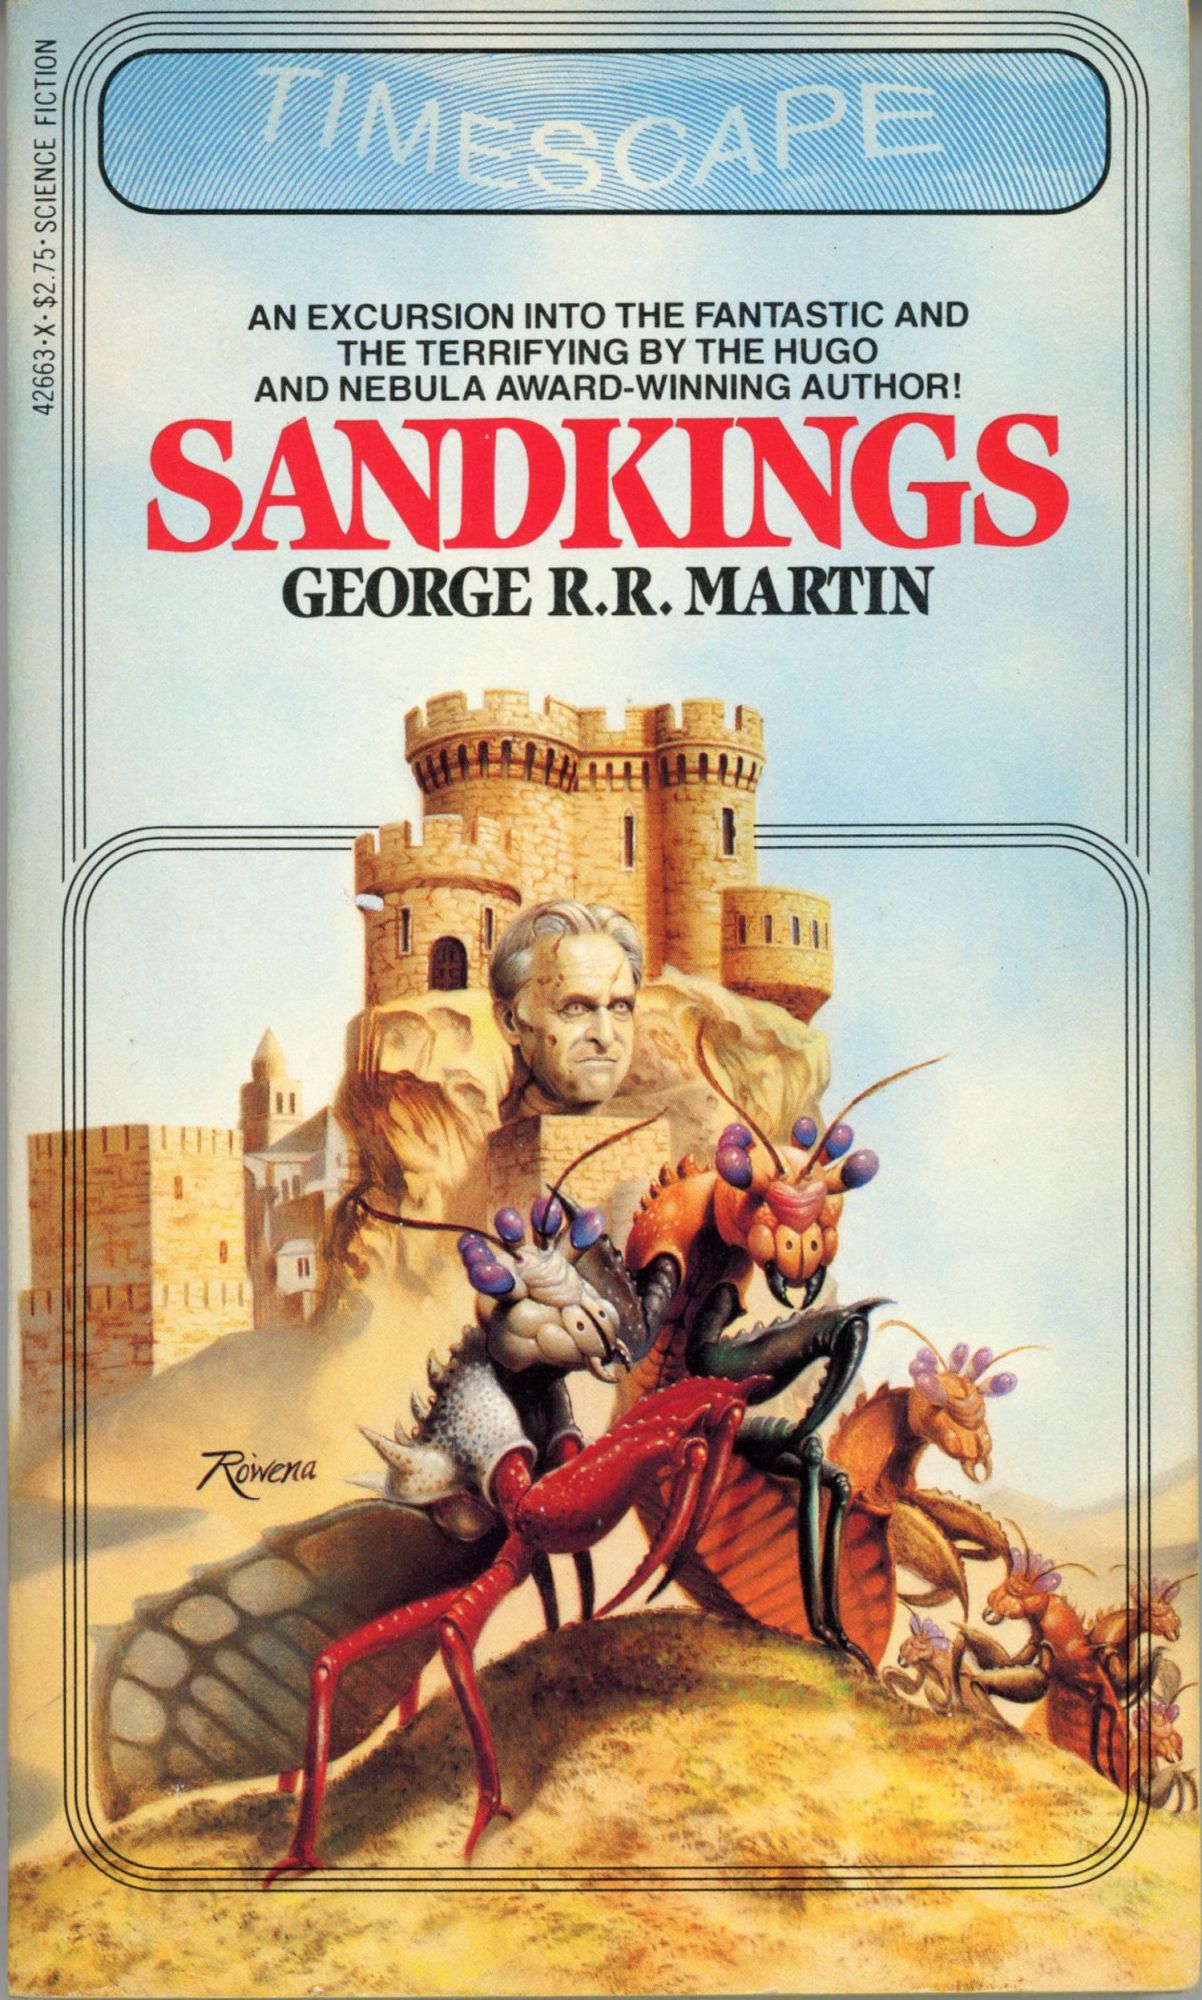 Sandkings George R.R. Martin